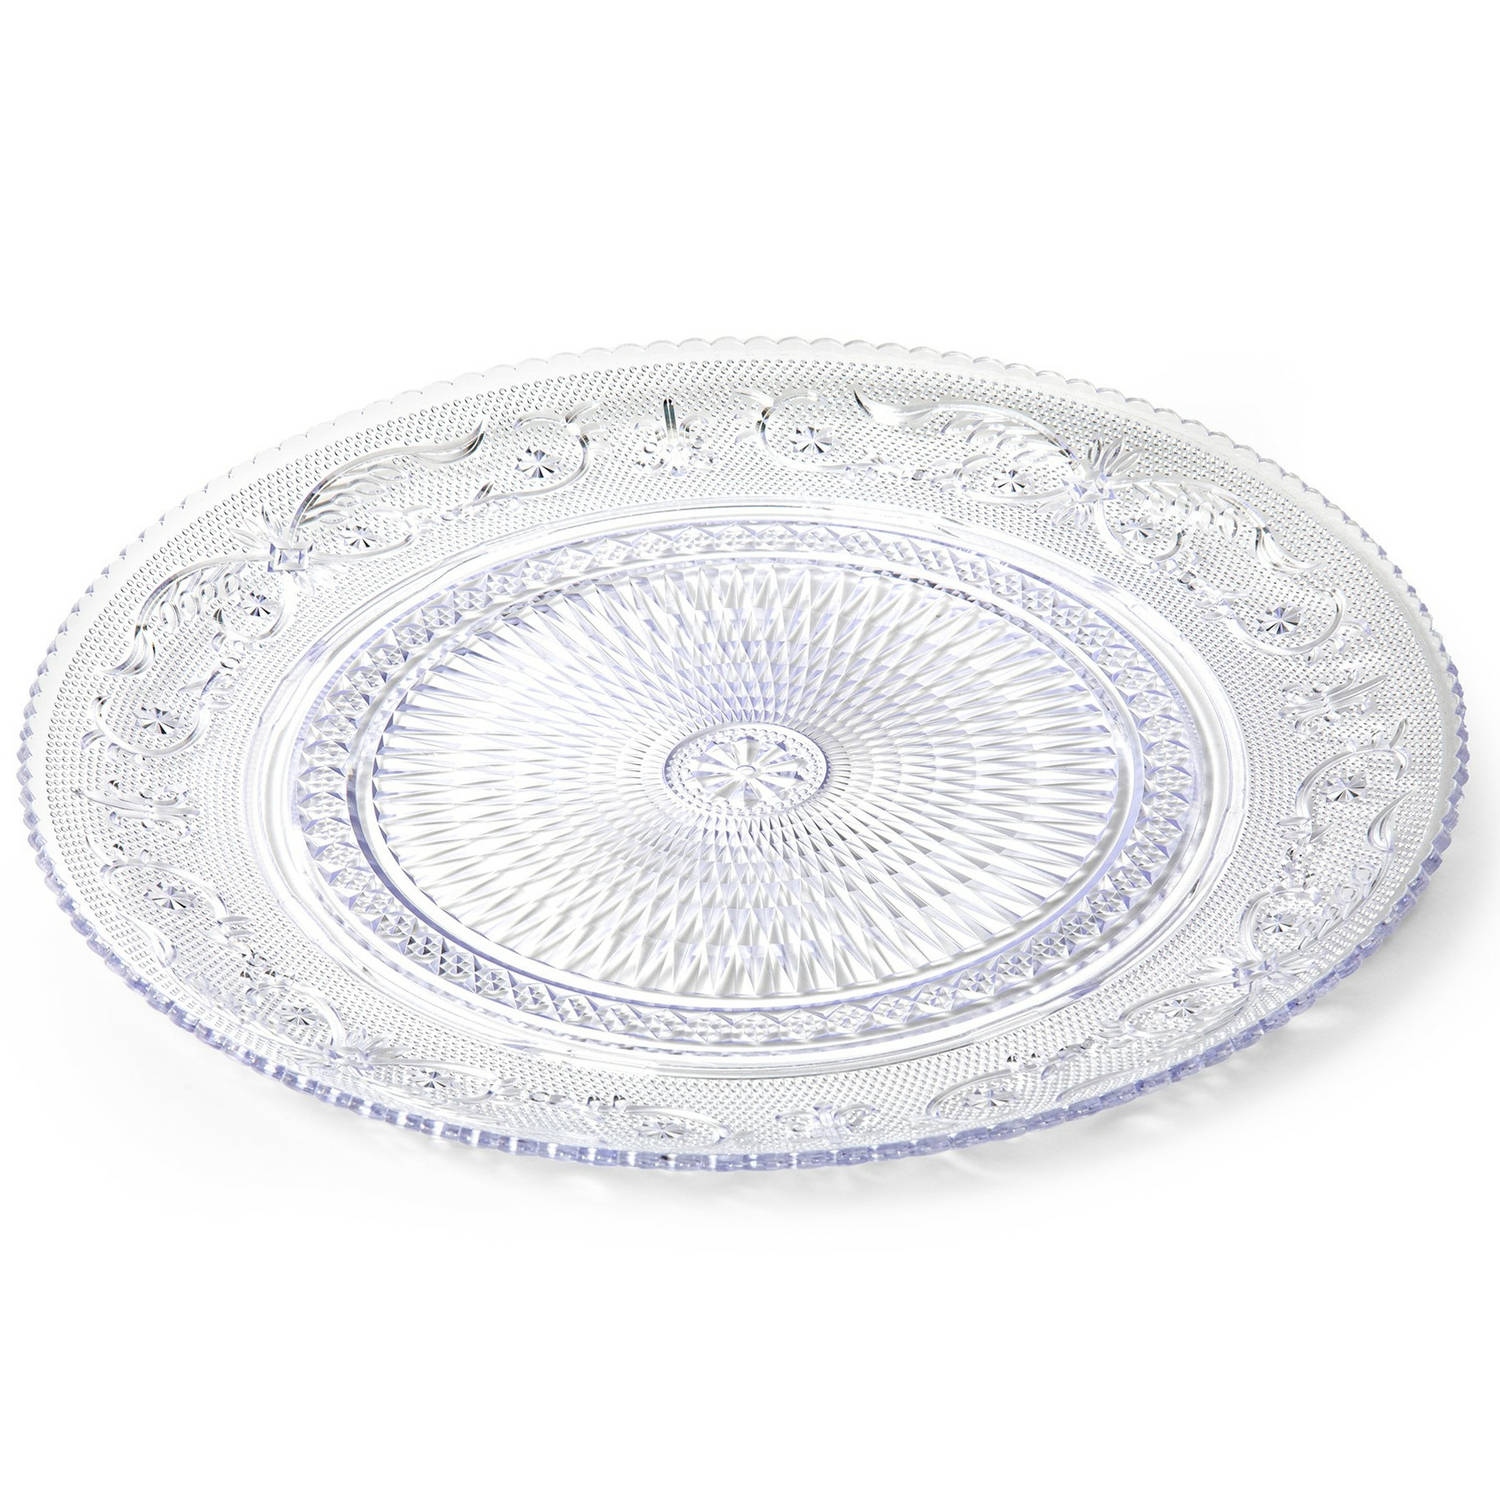 Plasticforte Onbreekbare Ontbijt/gebakbordjes - kunststof - kristal stijl - transparant - 18 cm - Campingborden